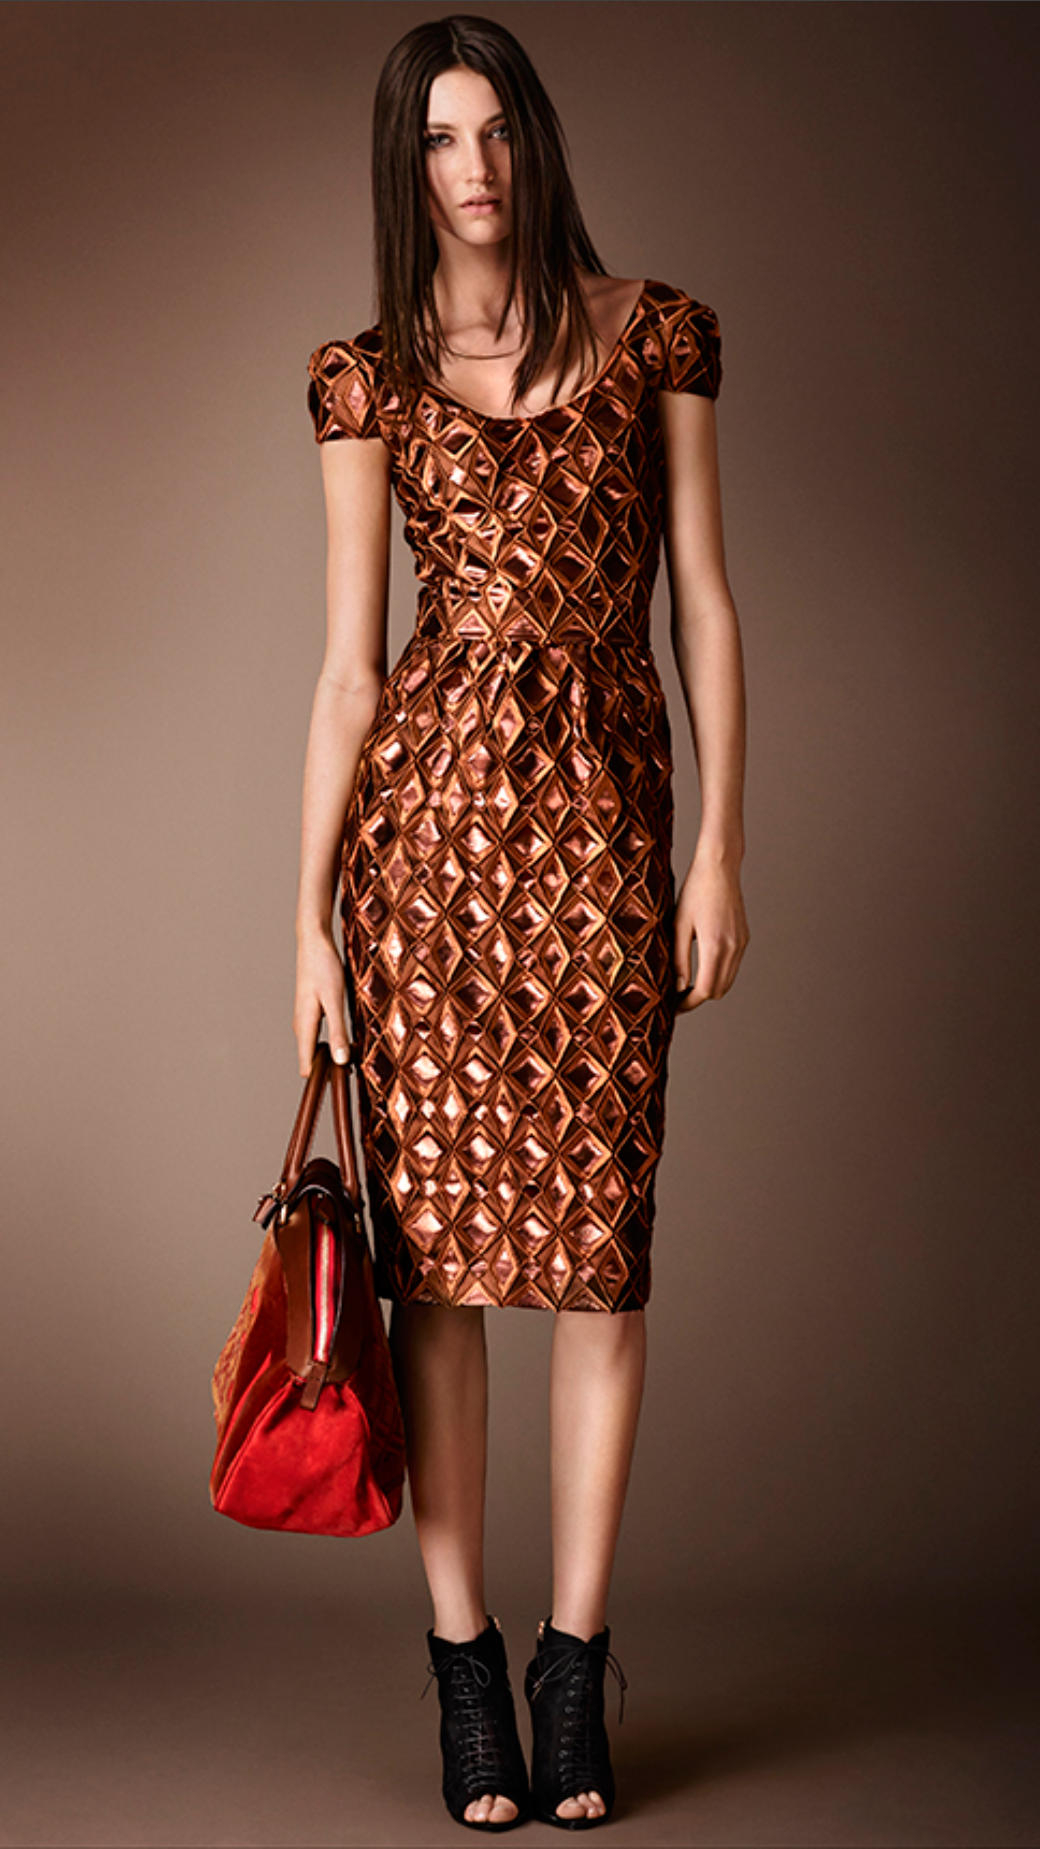 Lyst - Burberry Metallic Geometric Cloqué Dress in Brown